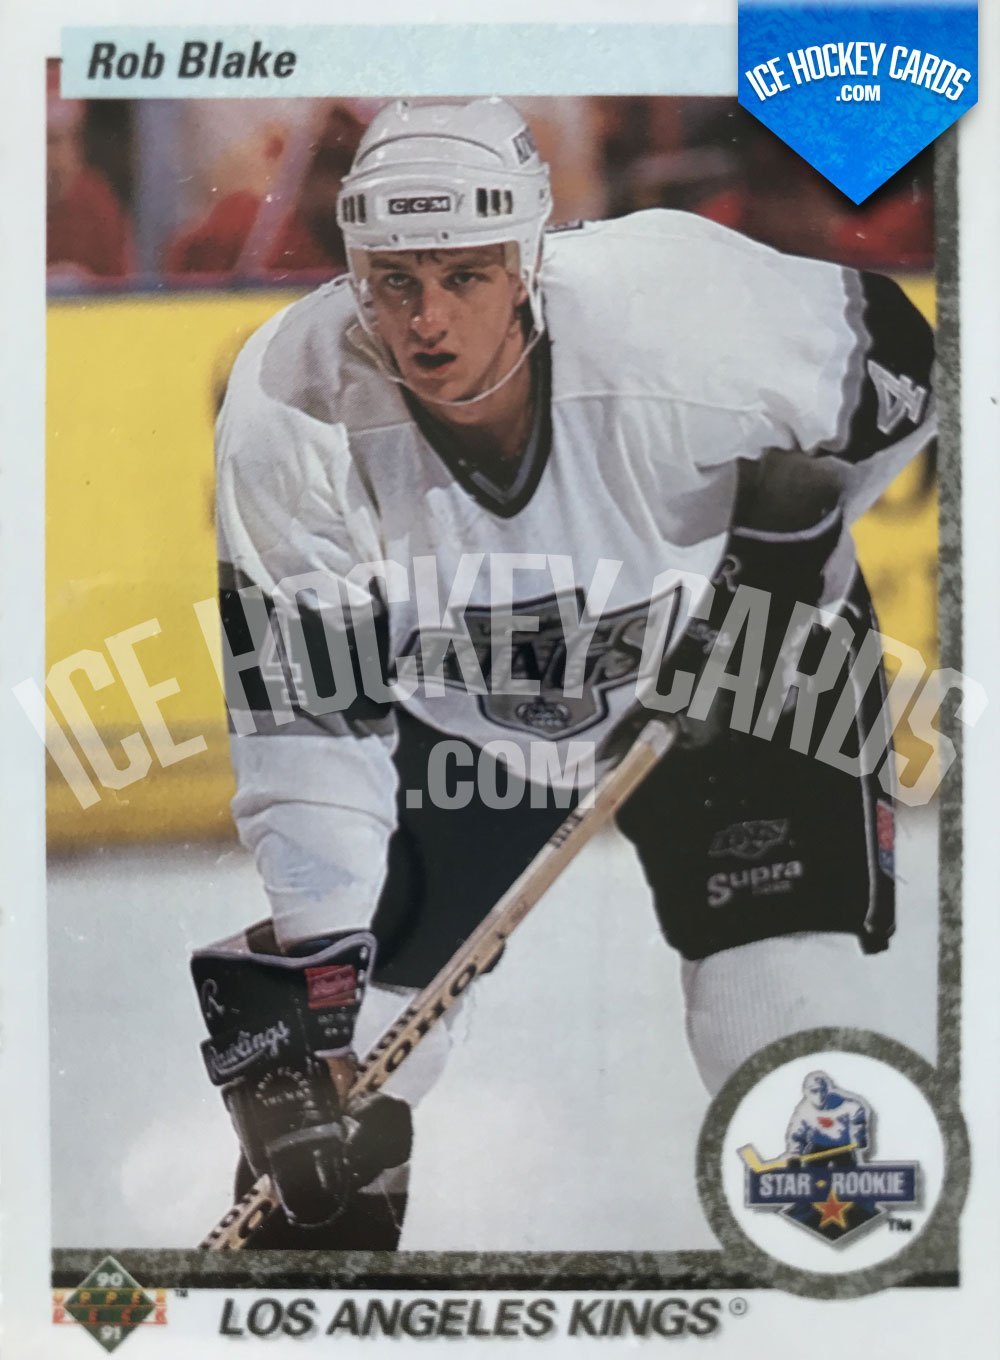 Upper Deck - 90-91 - Rob Blake Star Rookie Card